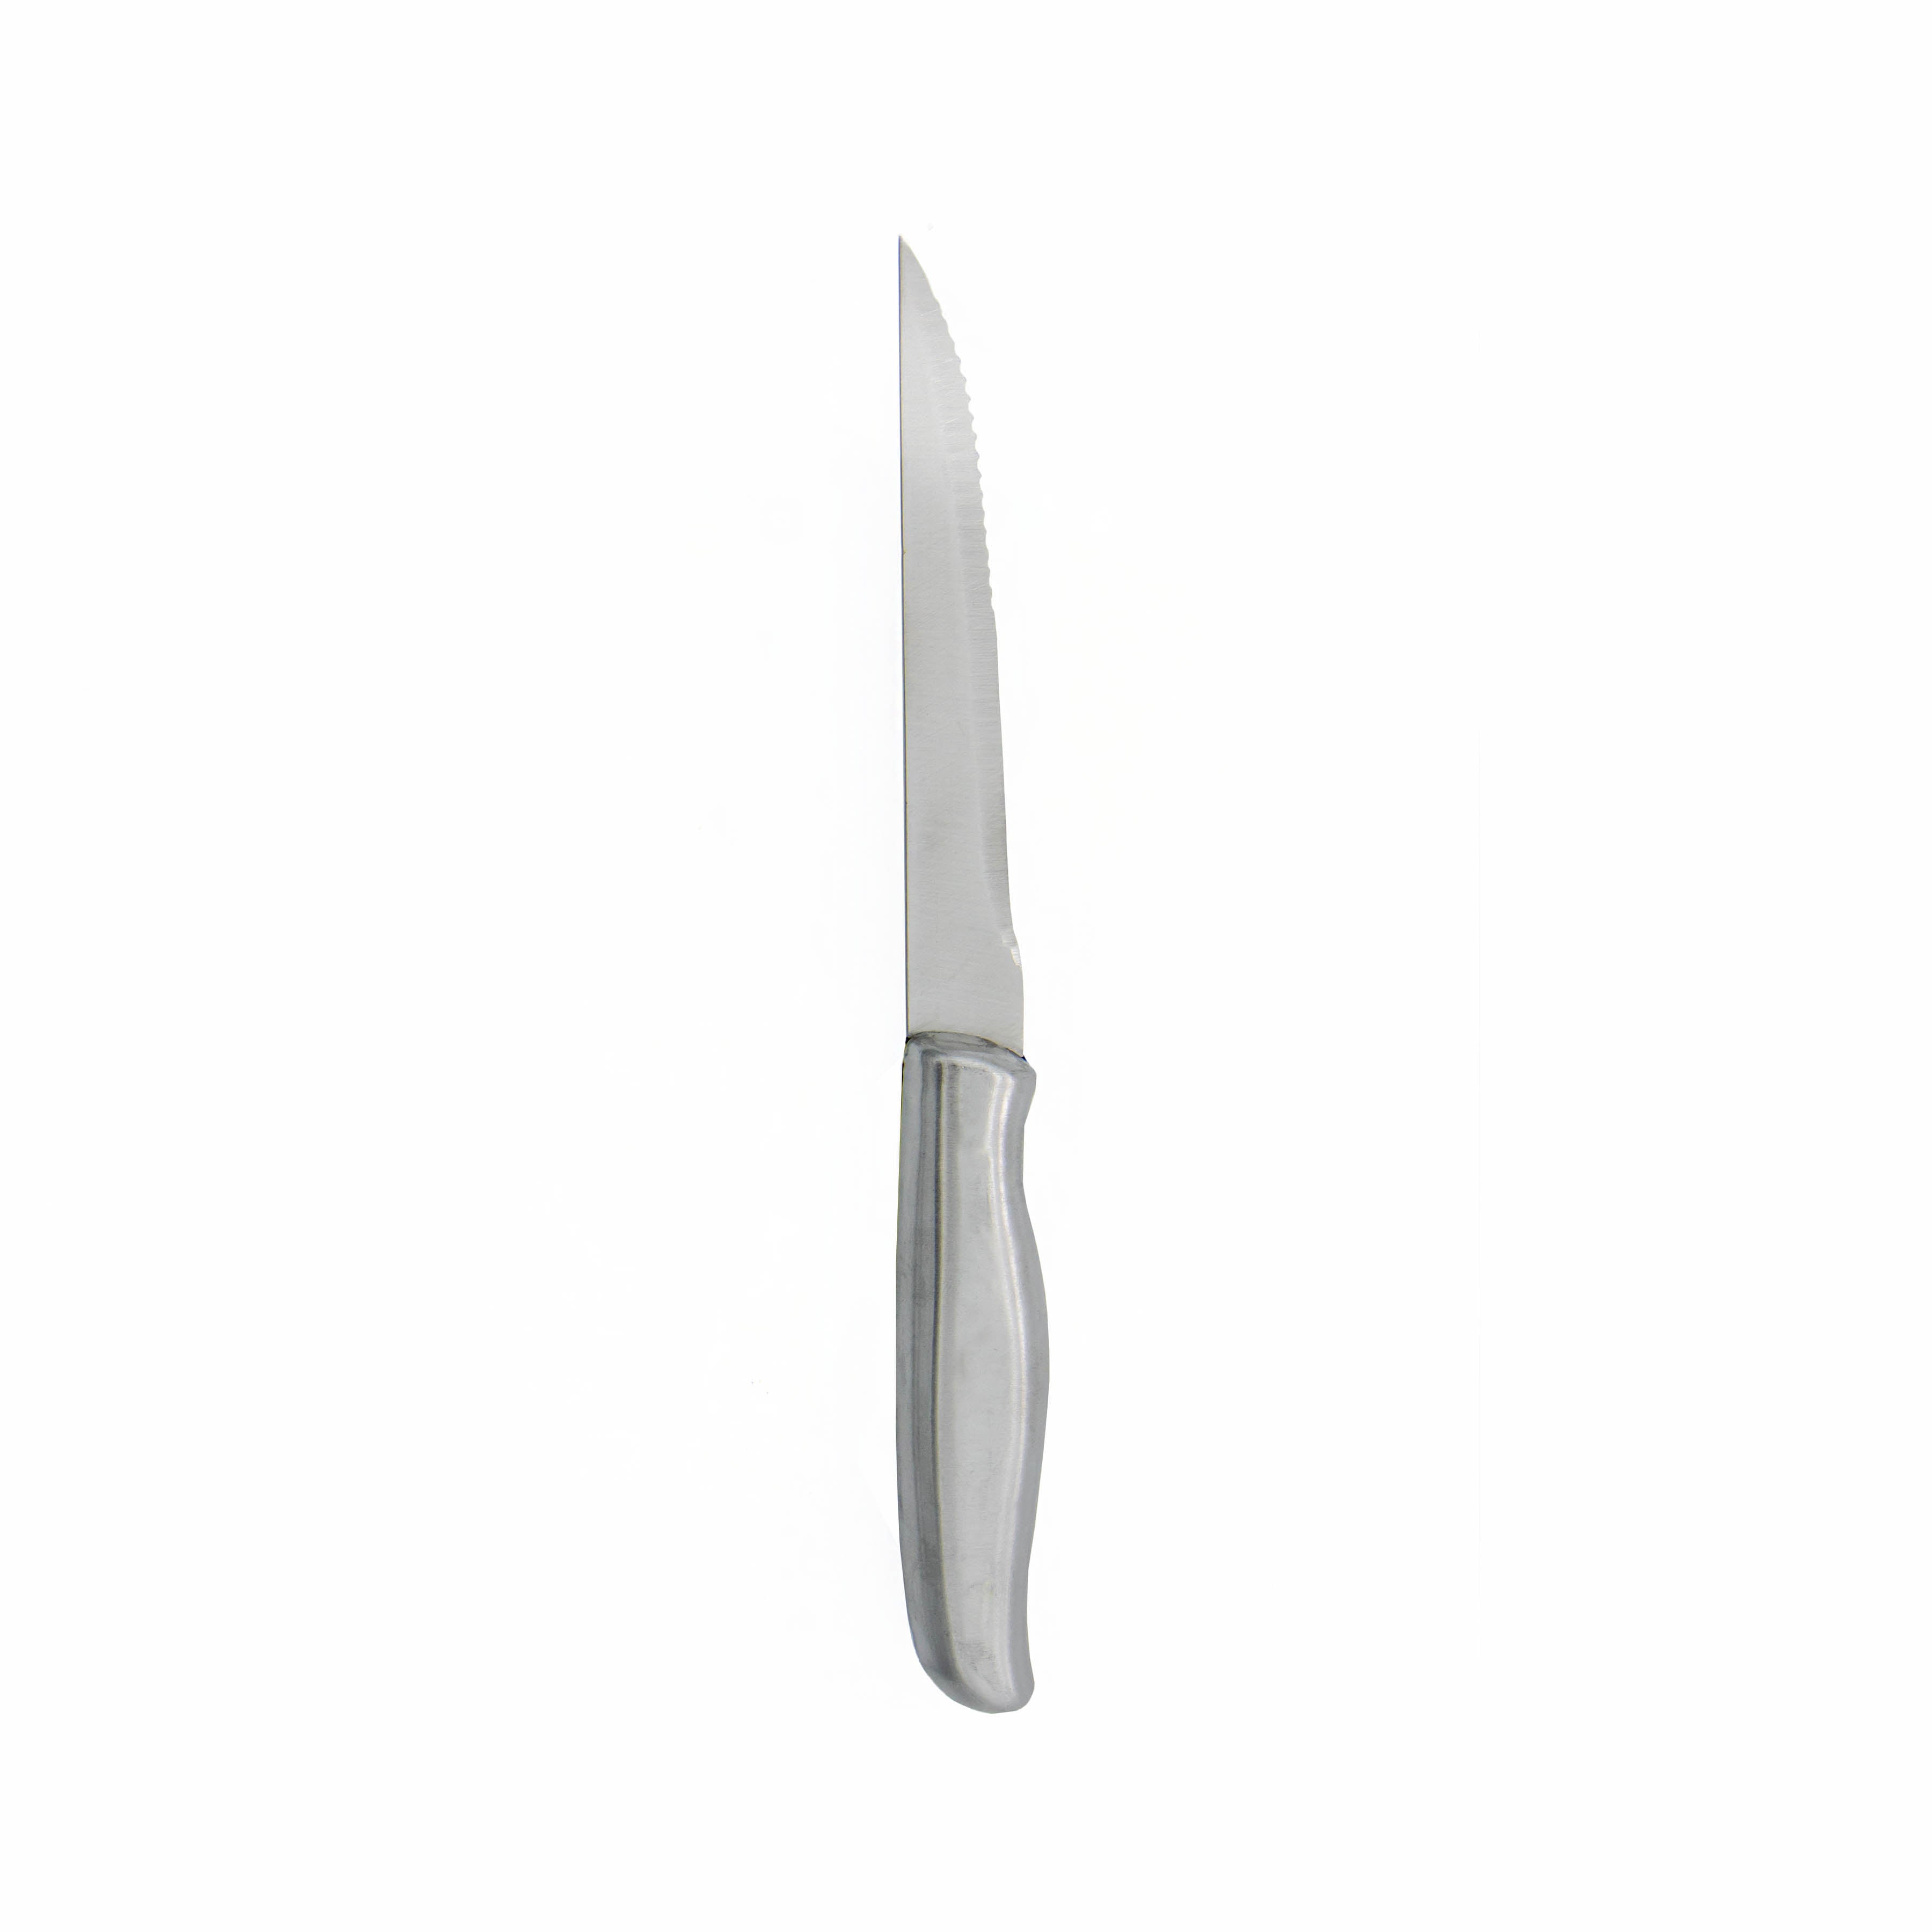 Knife Stainless Steel Steak 5 inch 363 8st